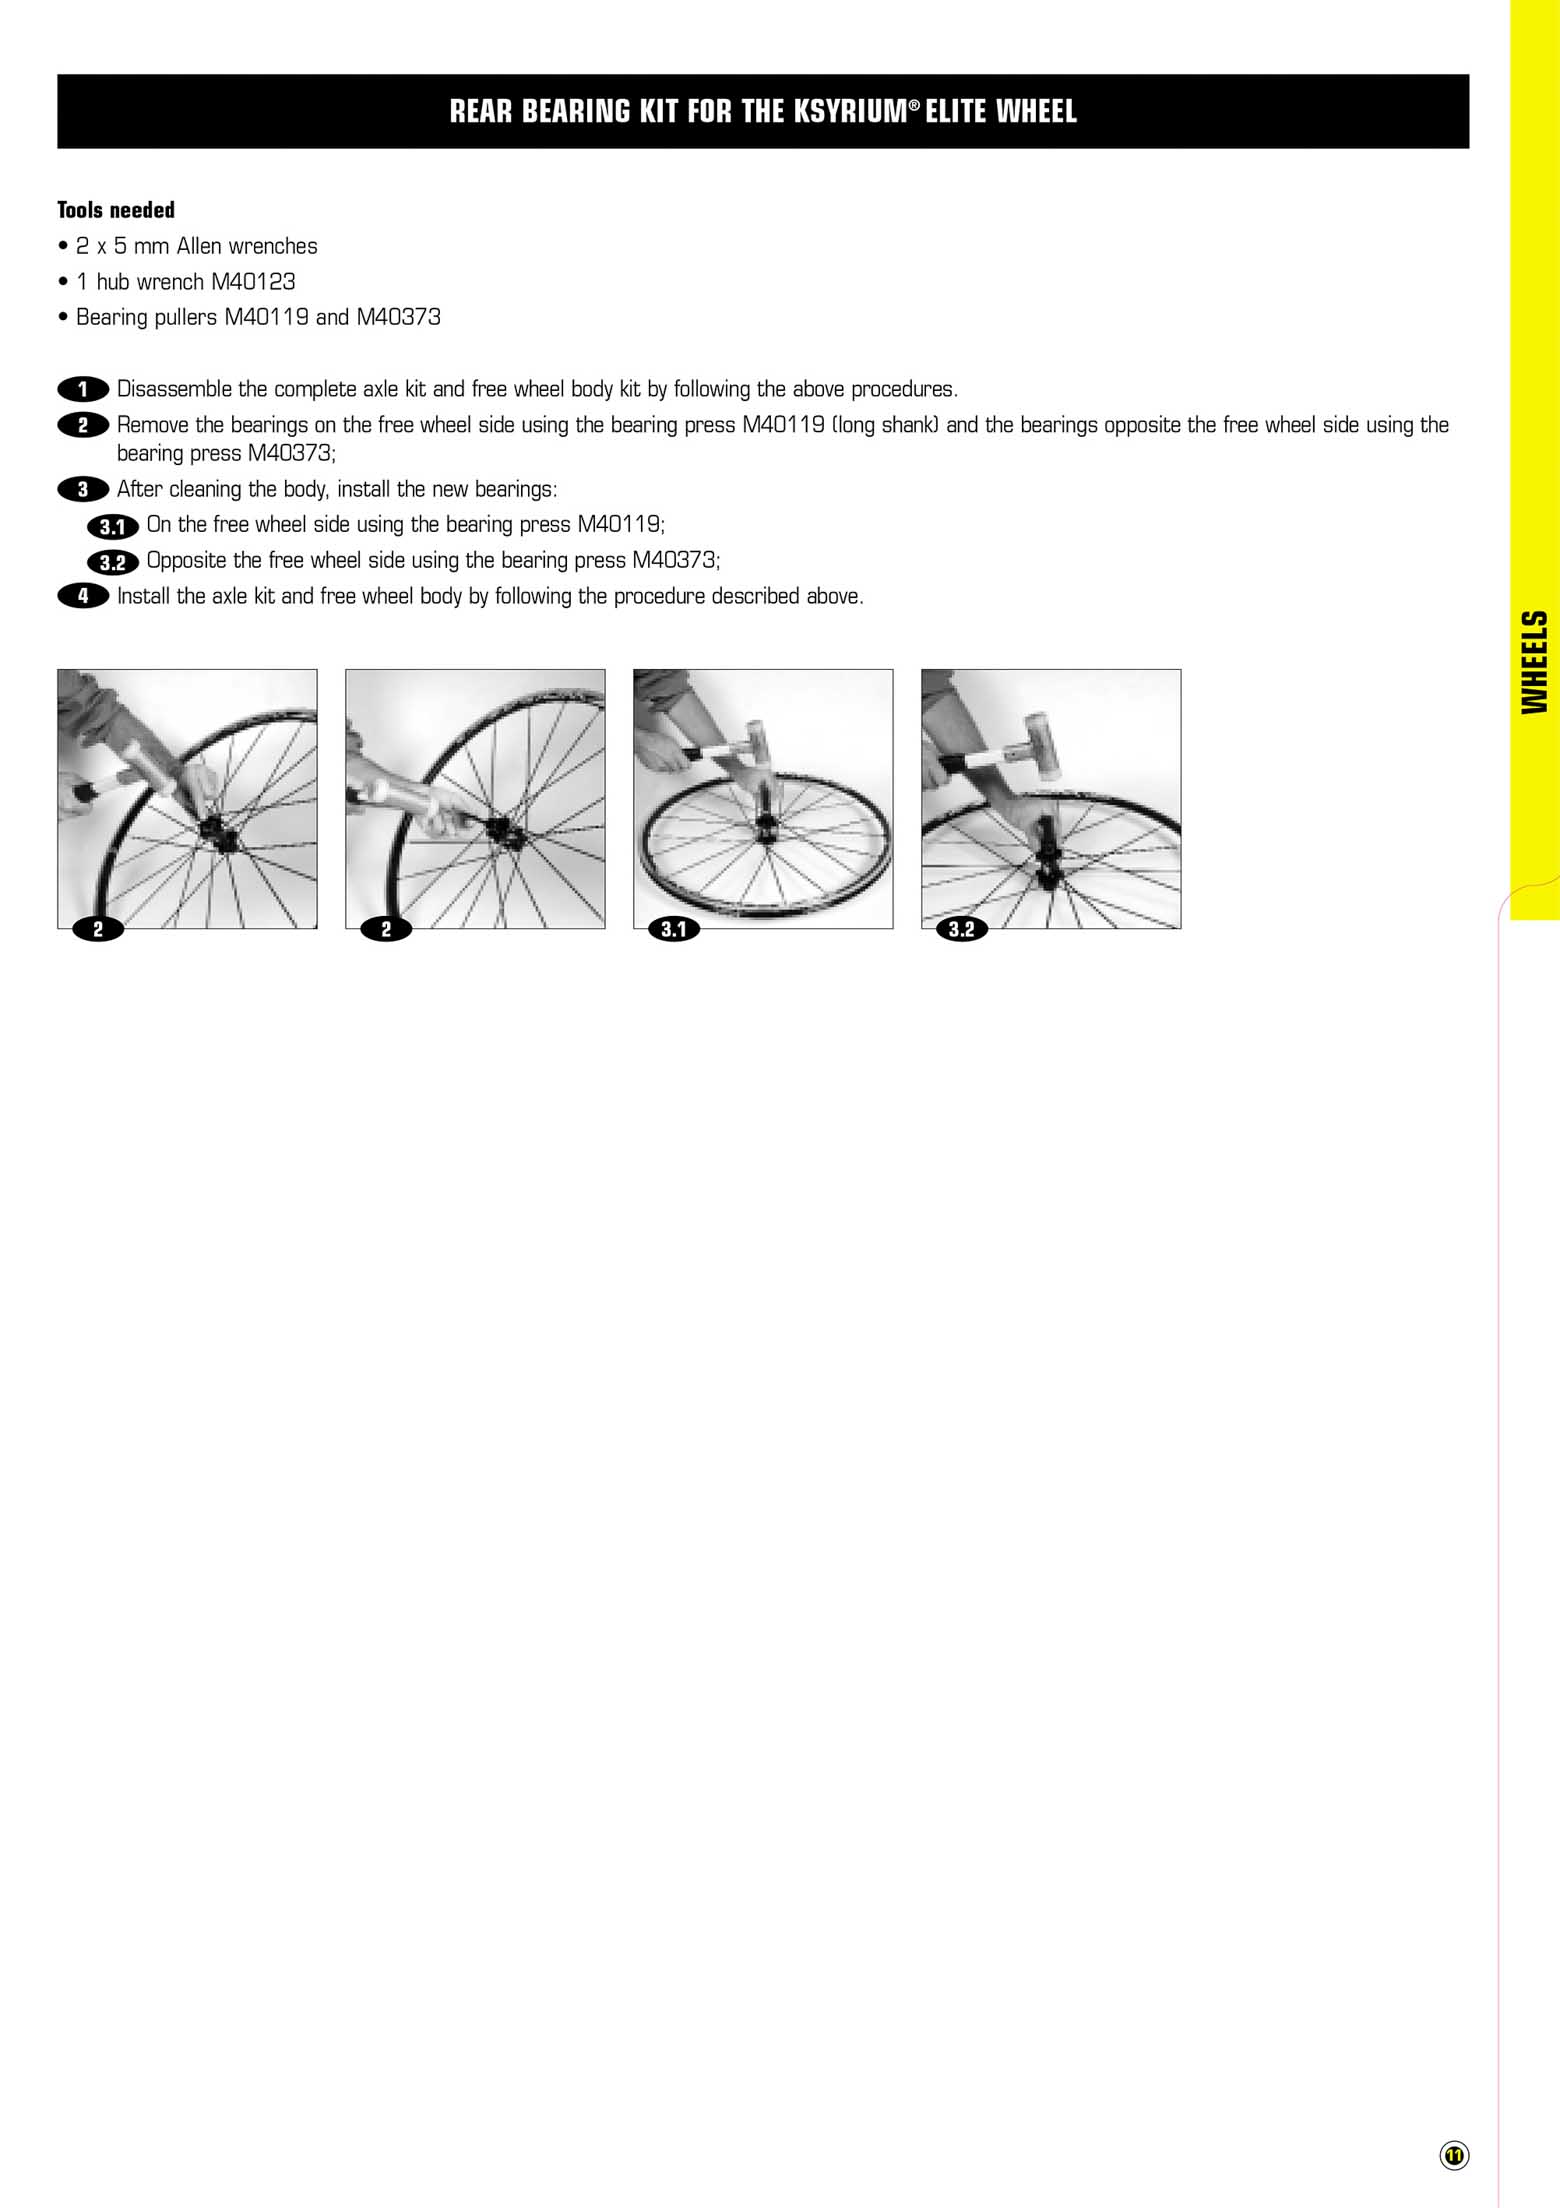 MAVIC - technical manual 02 page 011 main image